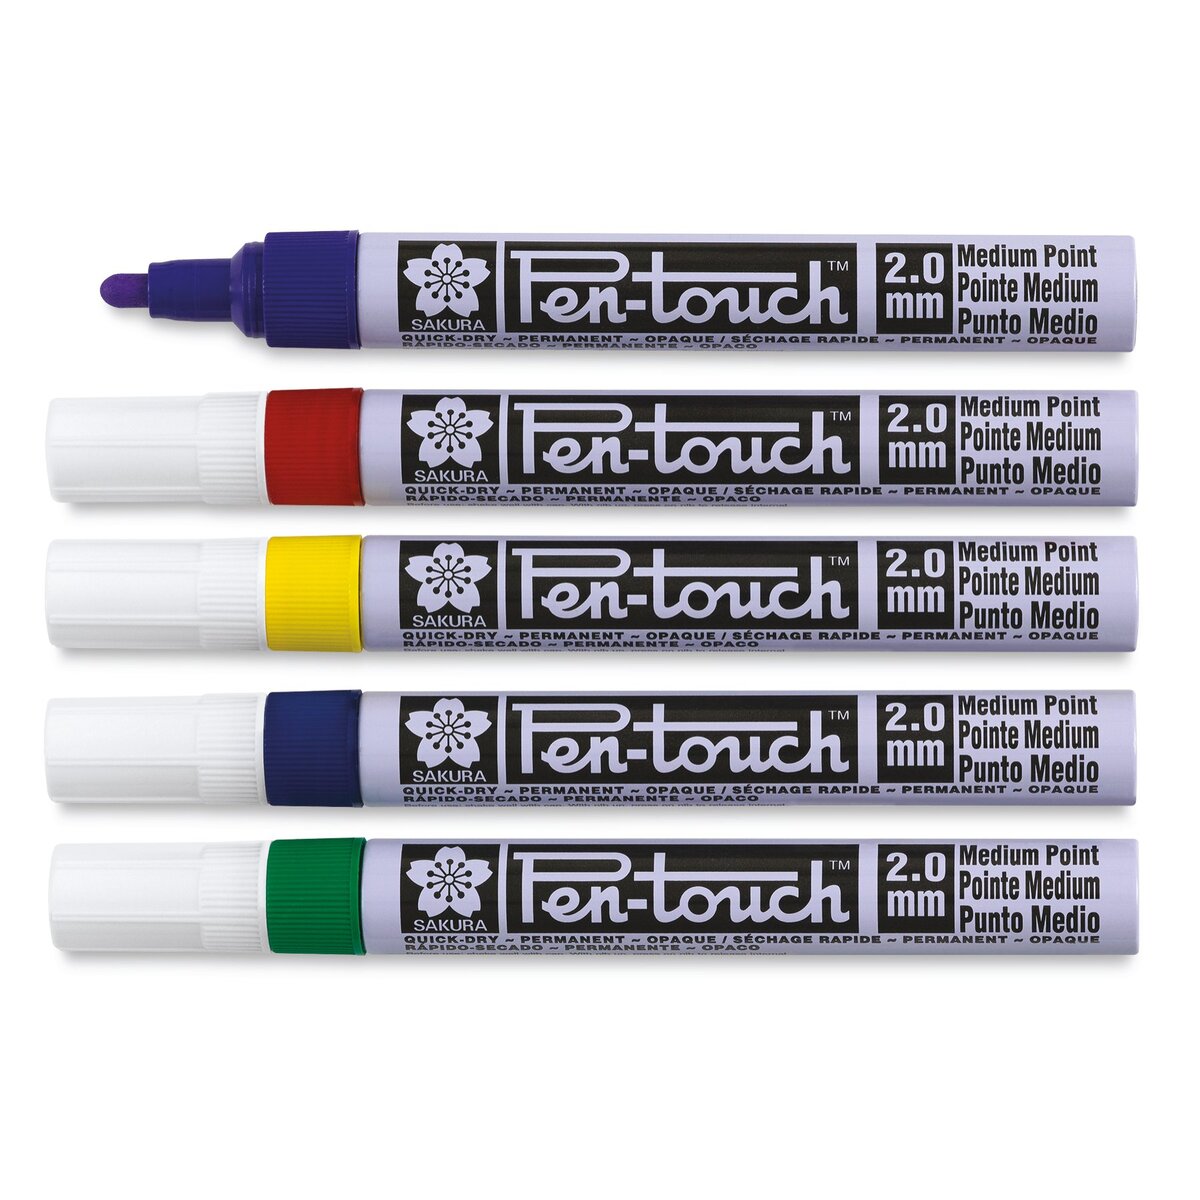 Sakura Pen-Touch Paint Marker Set - Assorted Colors, Medium Tip, Set of 5